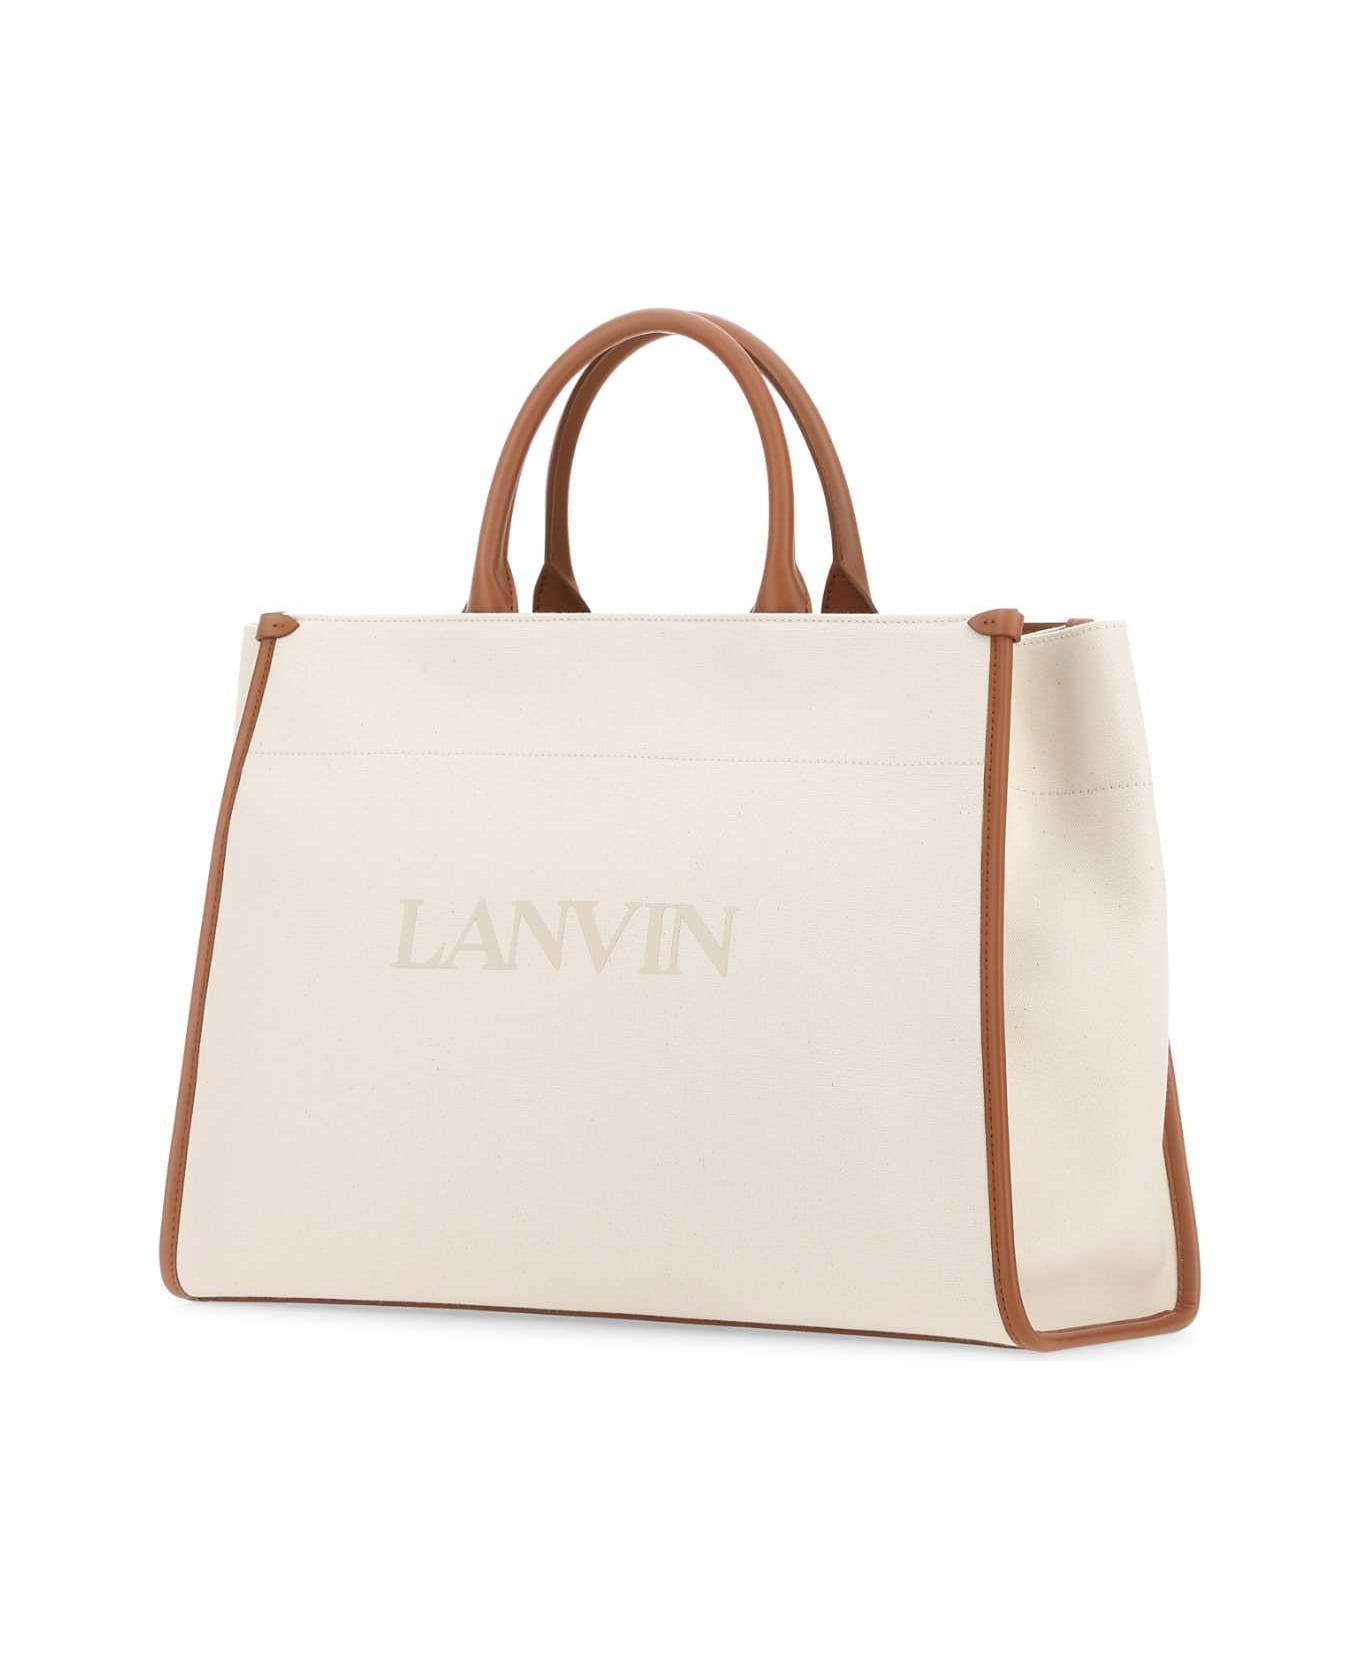 Lanvin Sand Canvas Shopping Bag - White